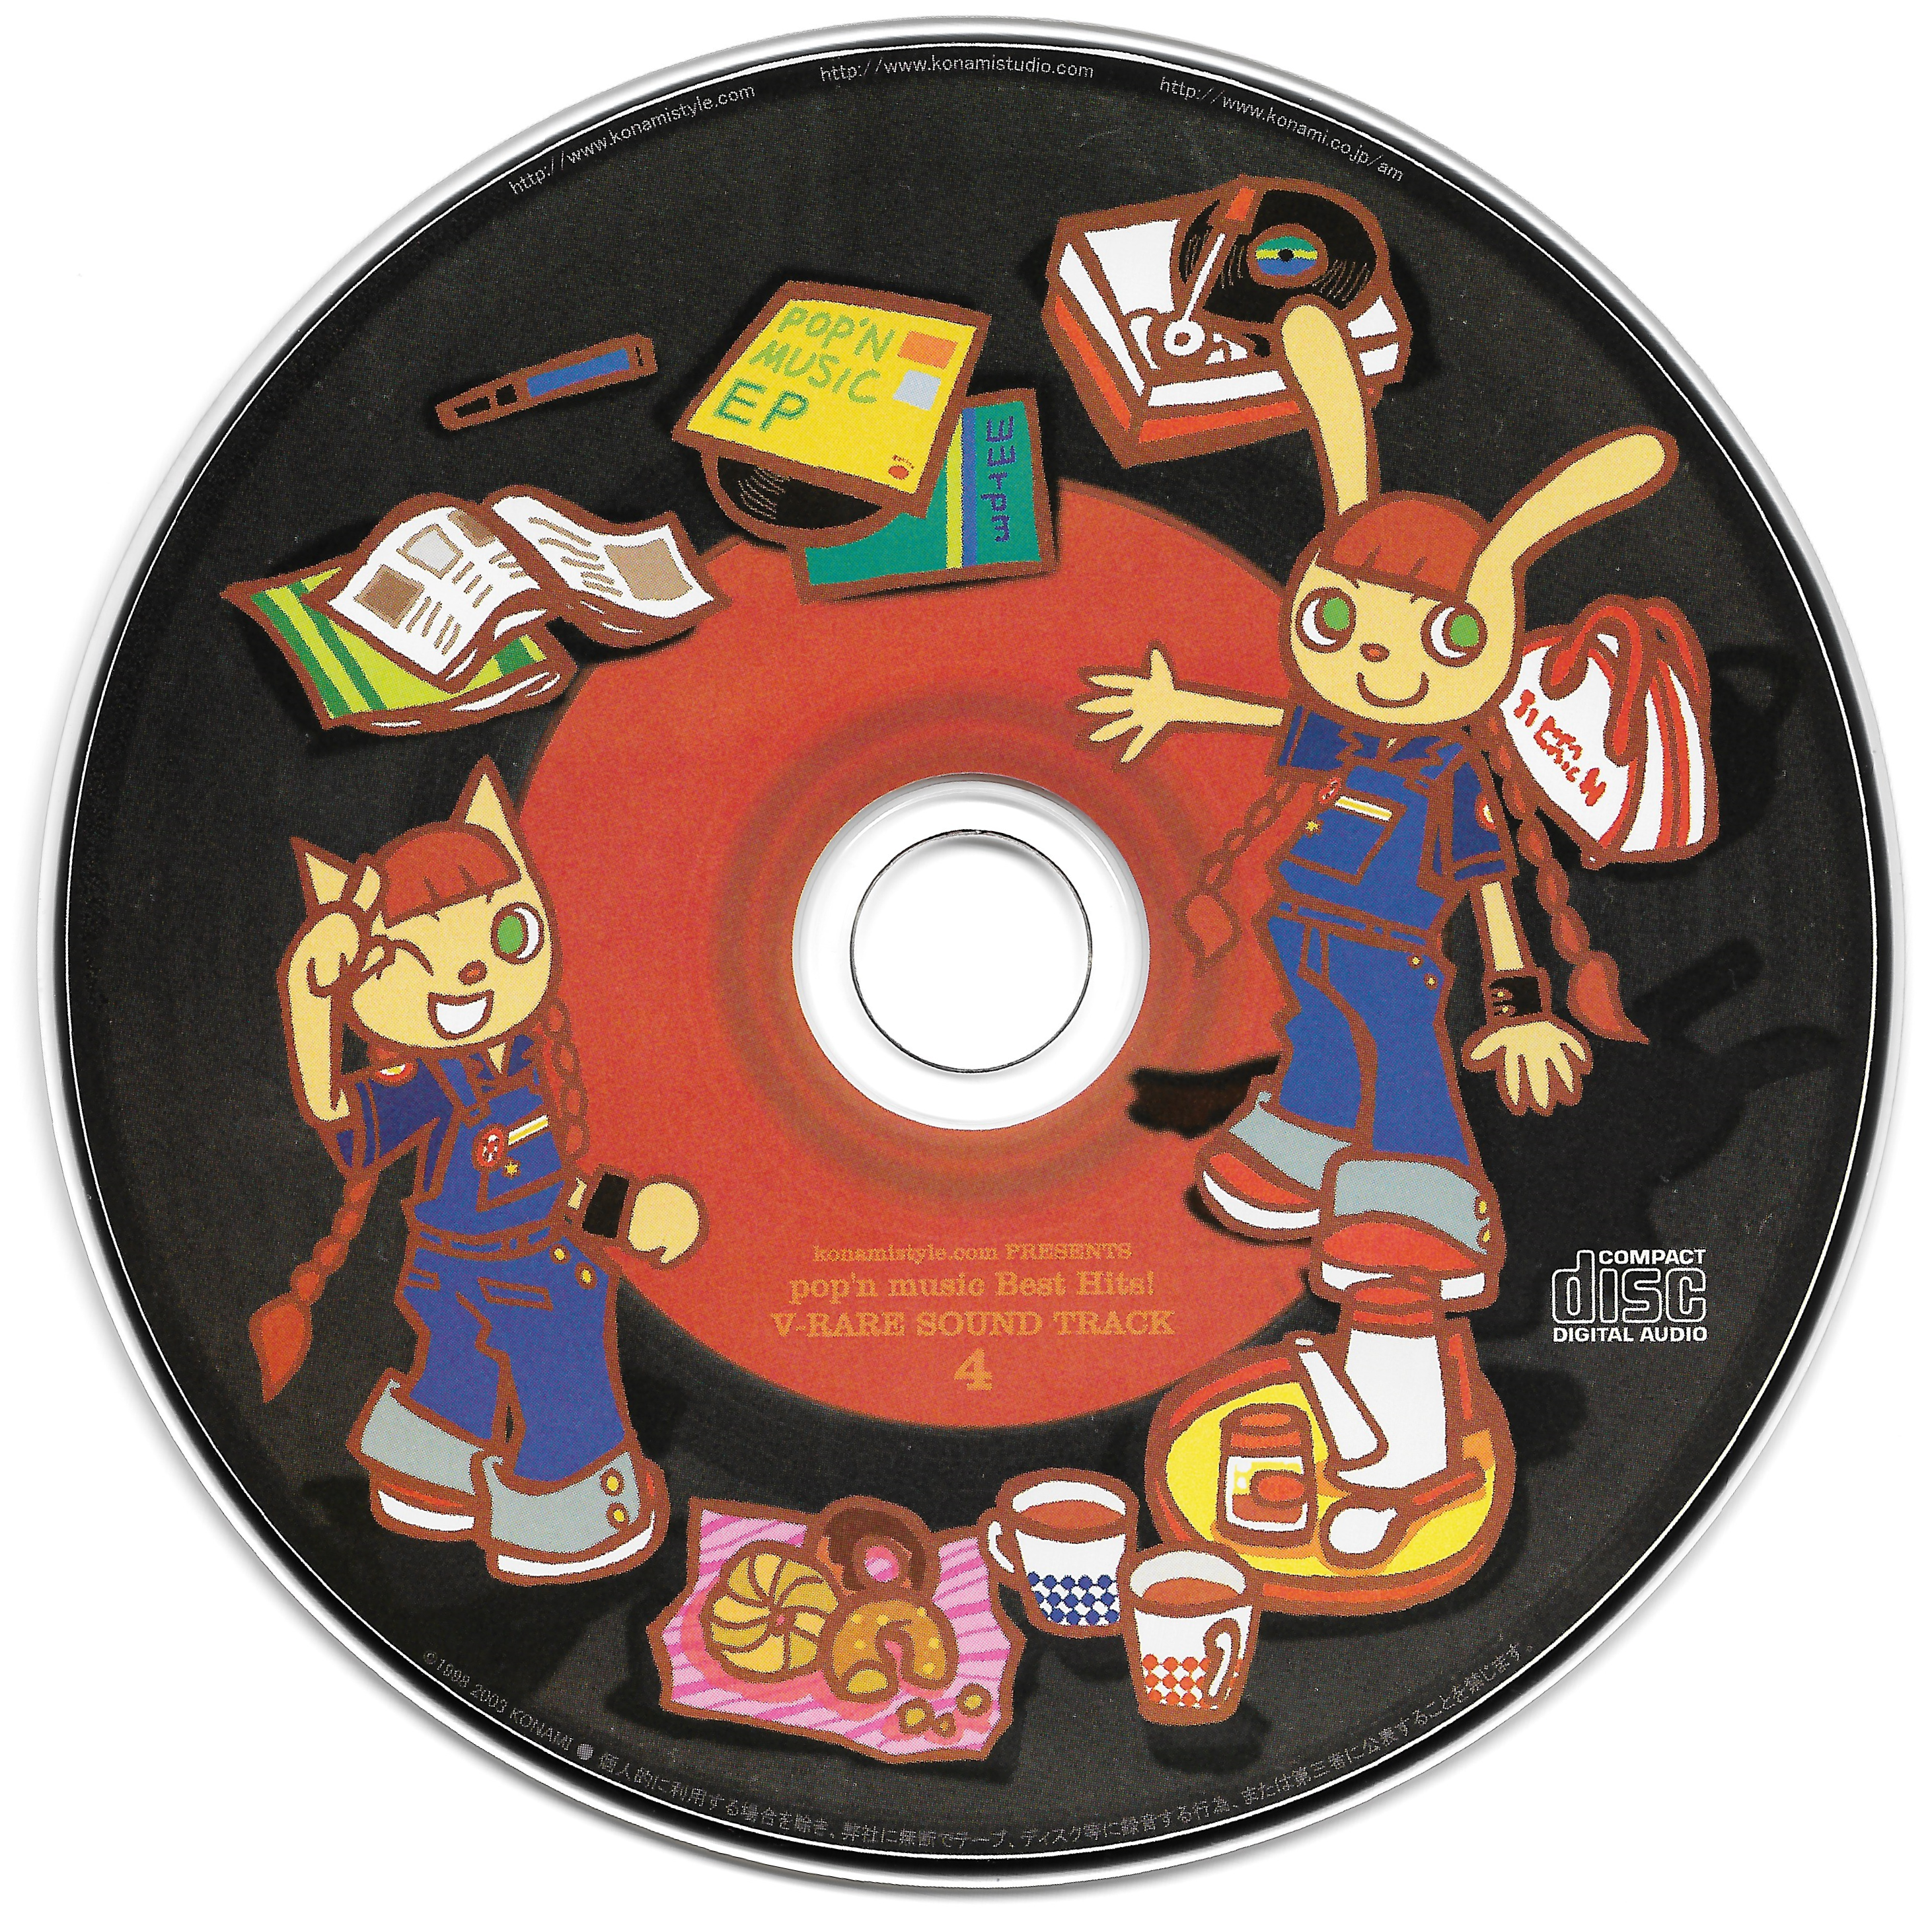 V-RARE SOUNDTRACK 4 - pop'n music Best Hits! (2003) MP3 - Download V-RARE  SOUNDTRACK 4 - pop'n music Best Hits! (2003) Soundtracks for FREE!